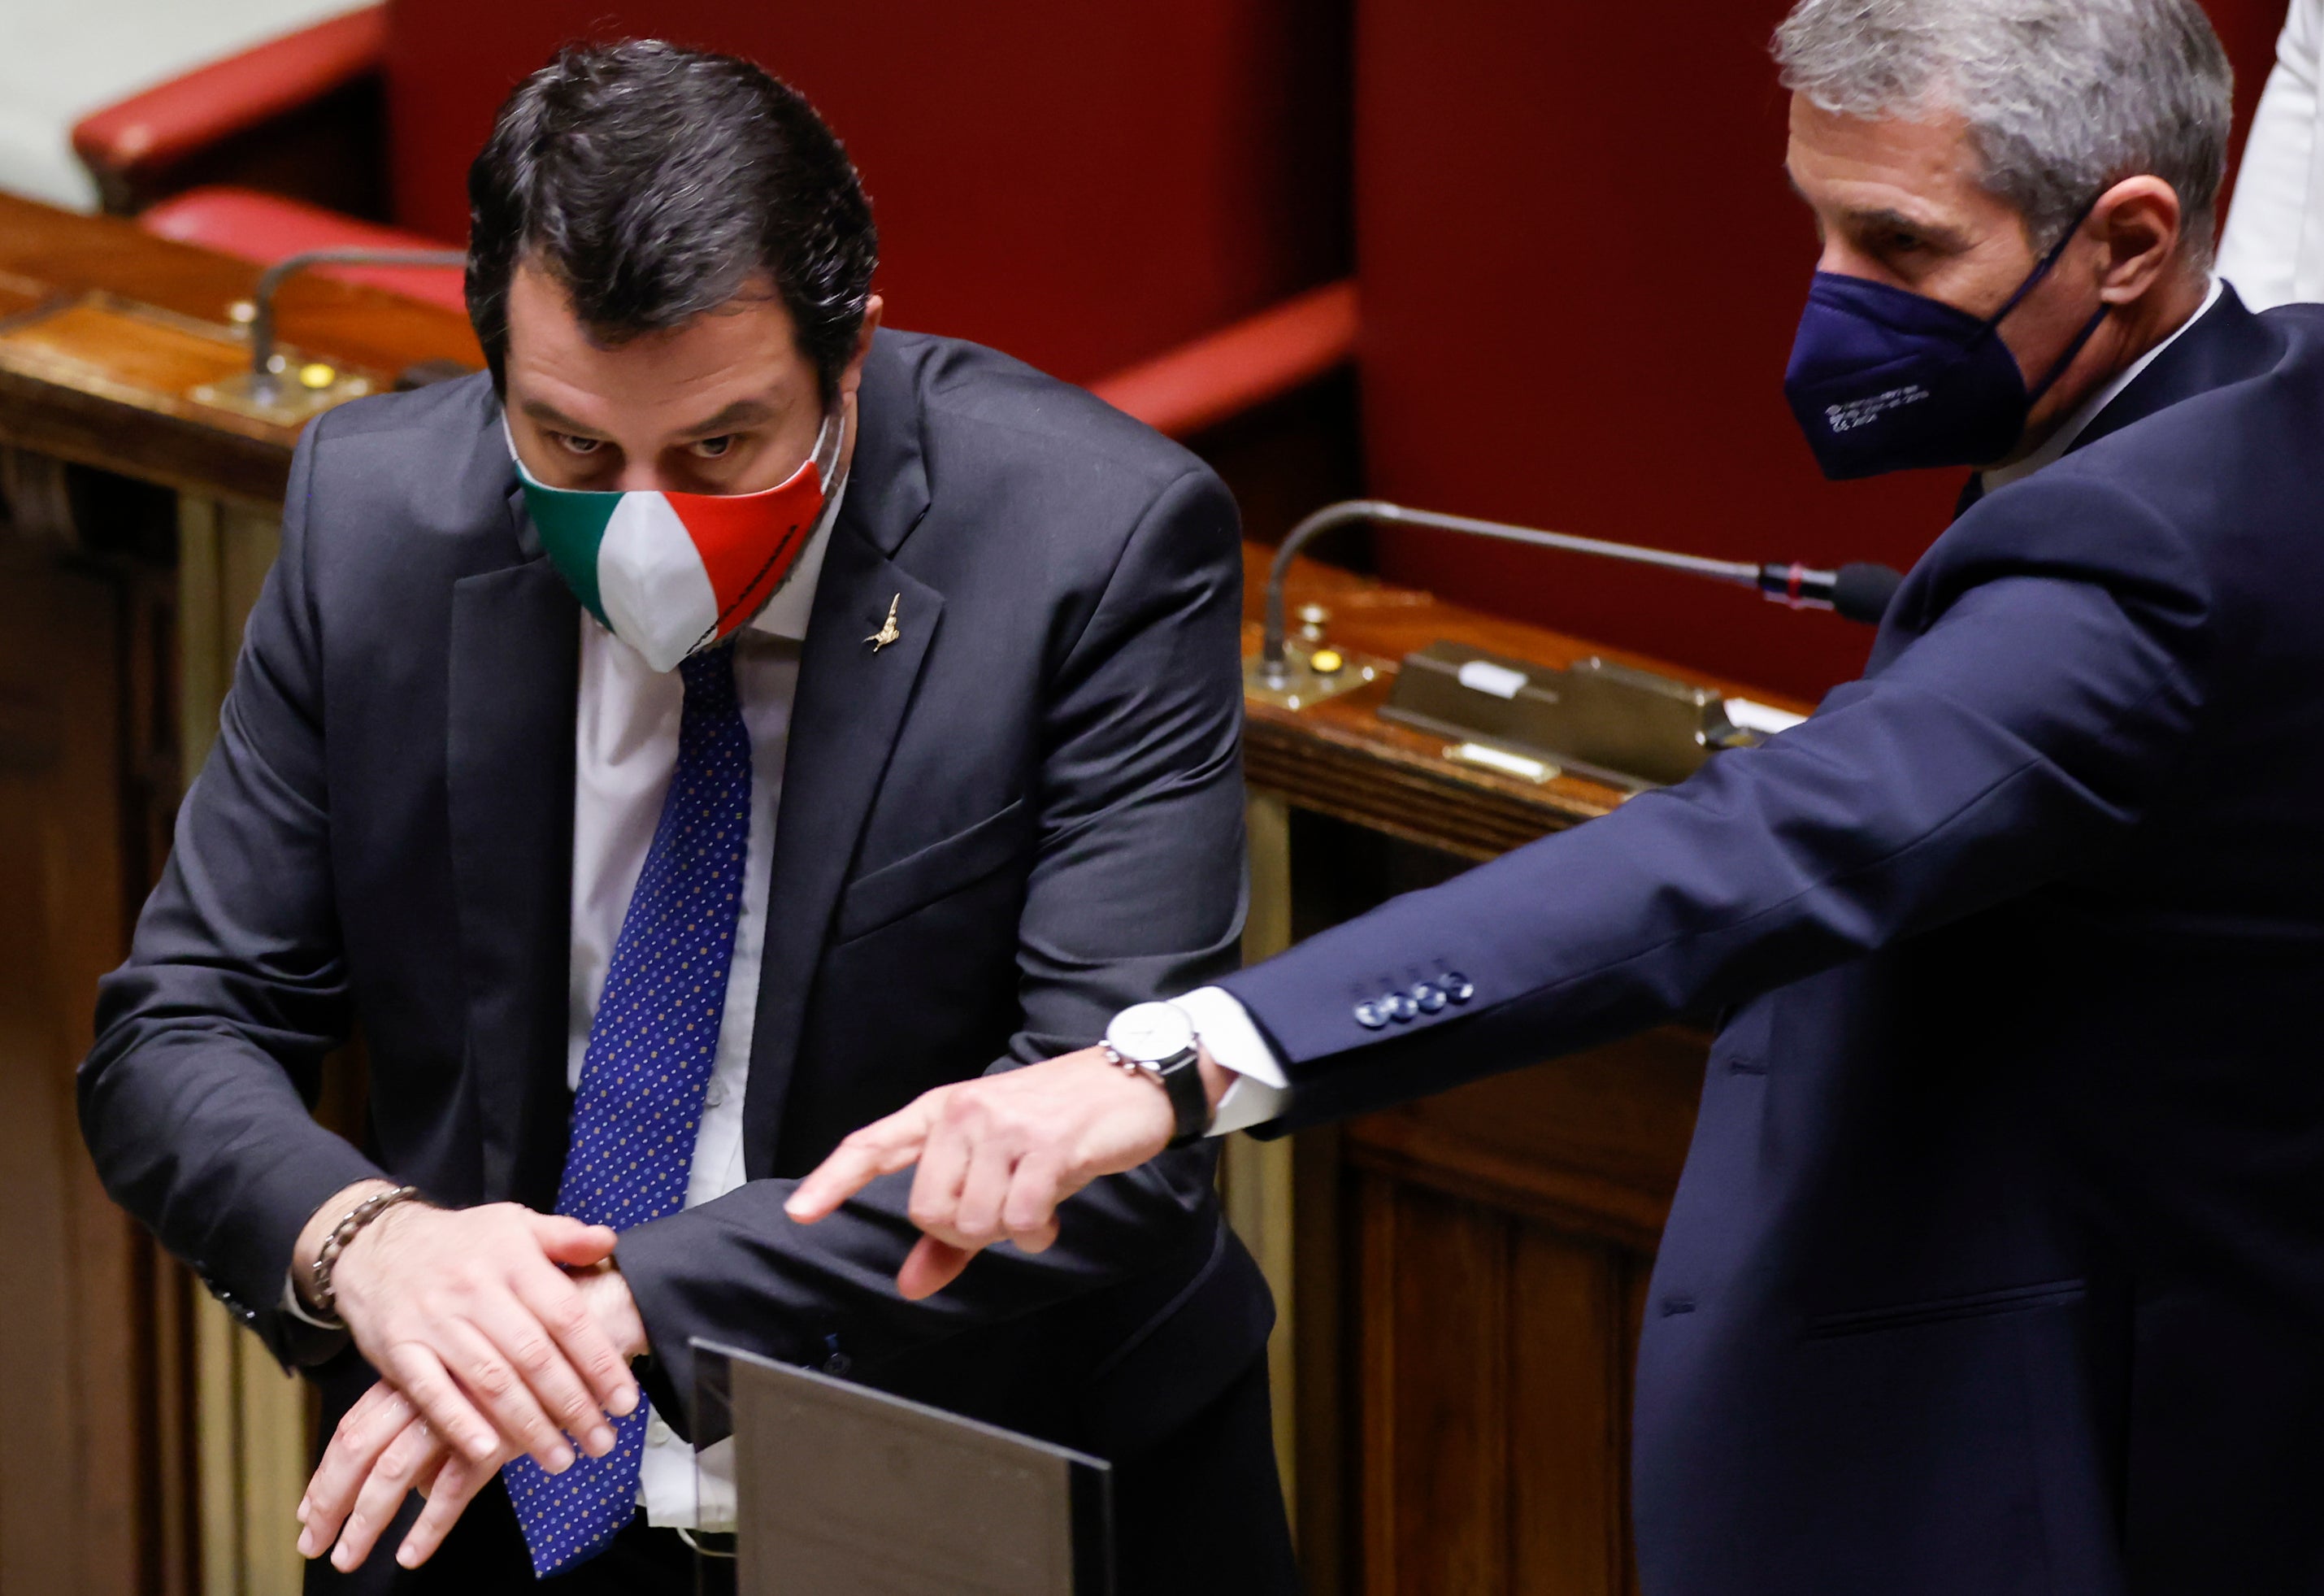 Member of Parliament Matteo Salvini, left, prepares to cast his ballot in the Italian parliament